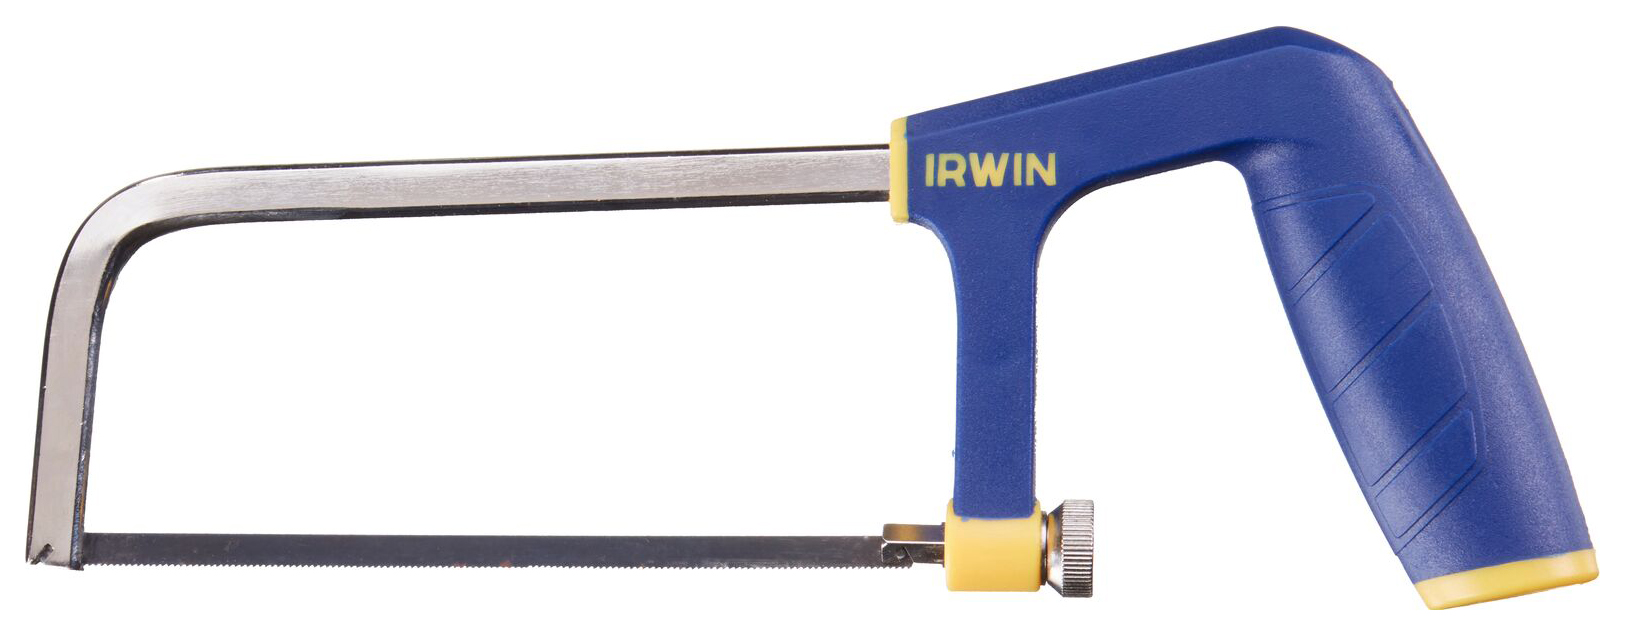 Irwin 10504409 14TPI Junior Hacksaw - 6in / 150mm